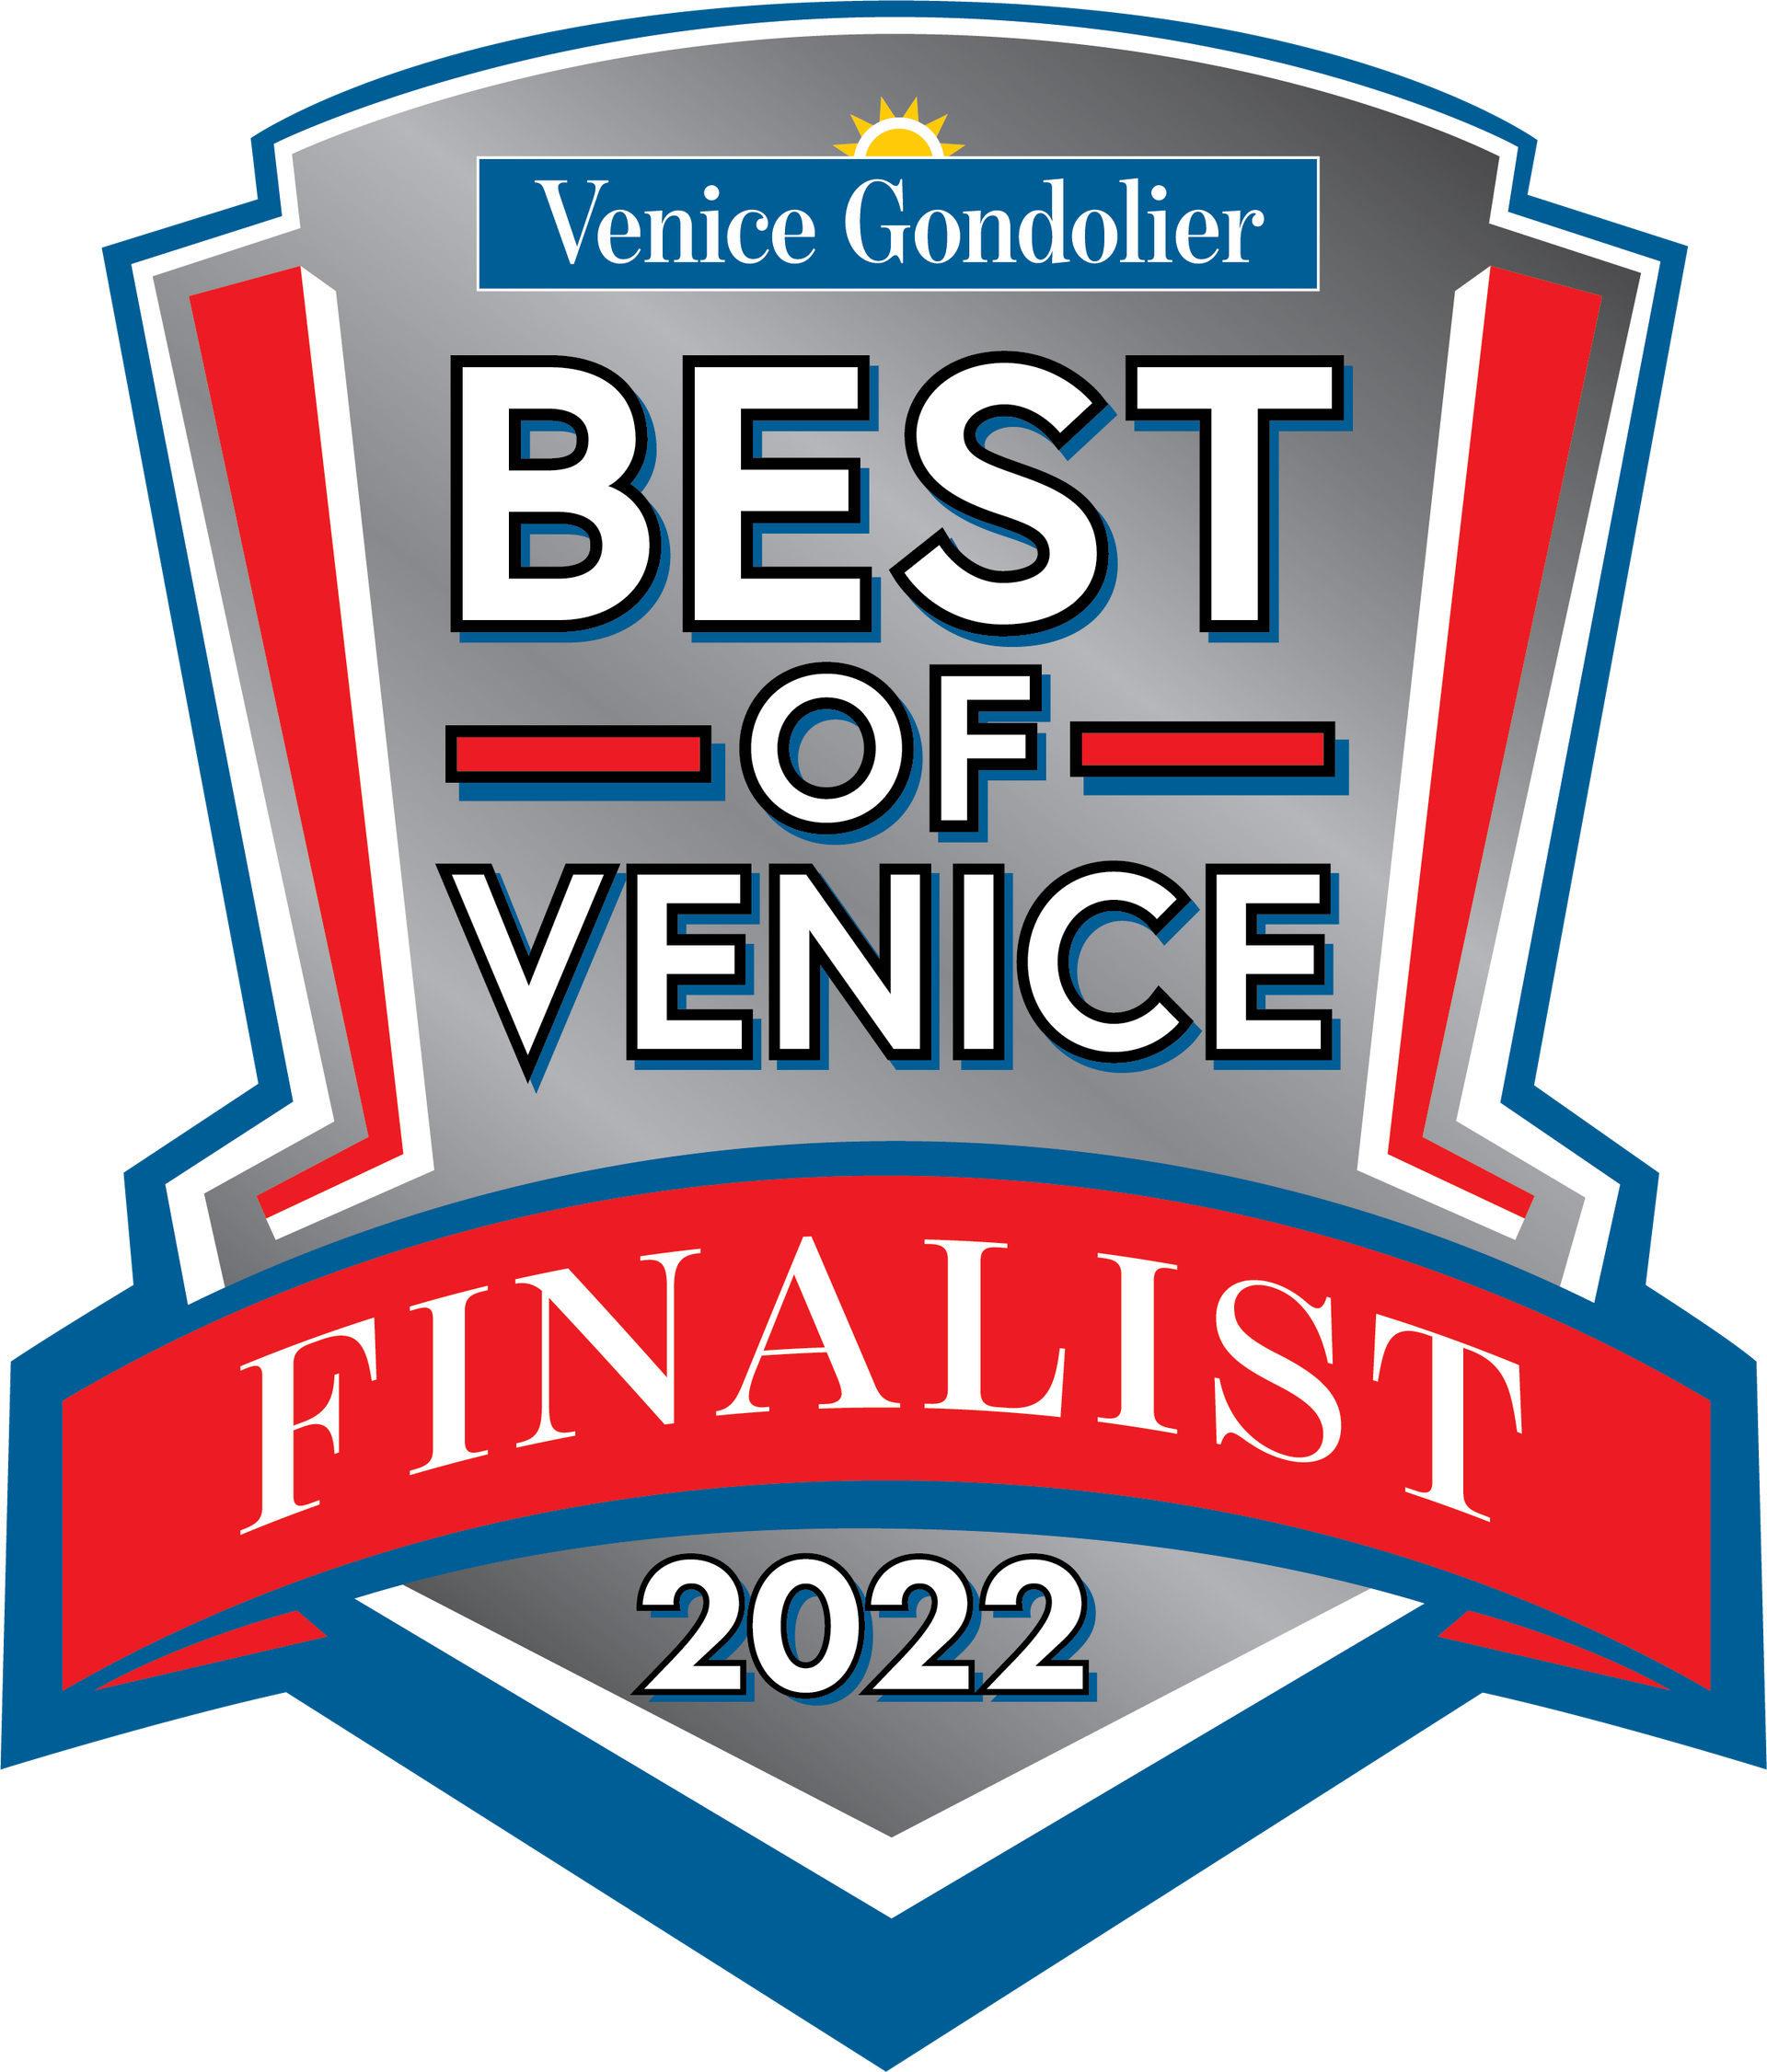 Bes of Venice Finalist 2022